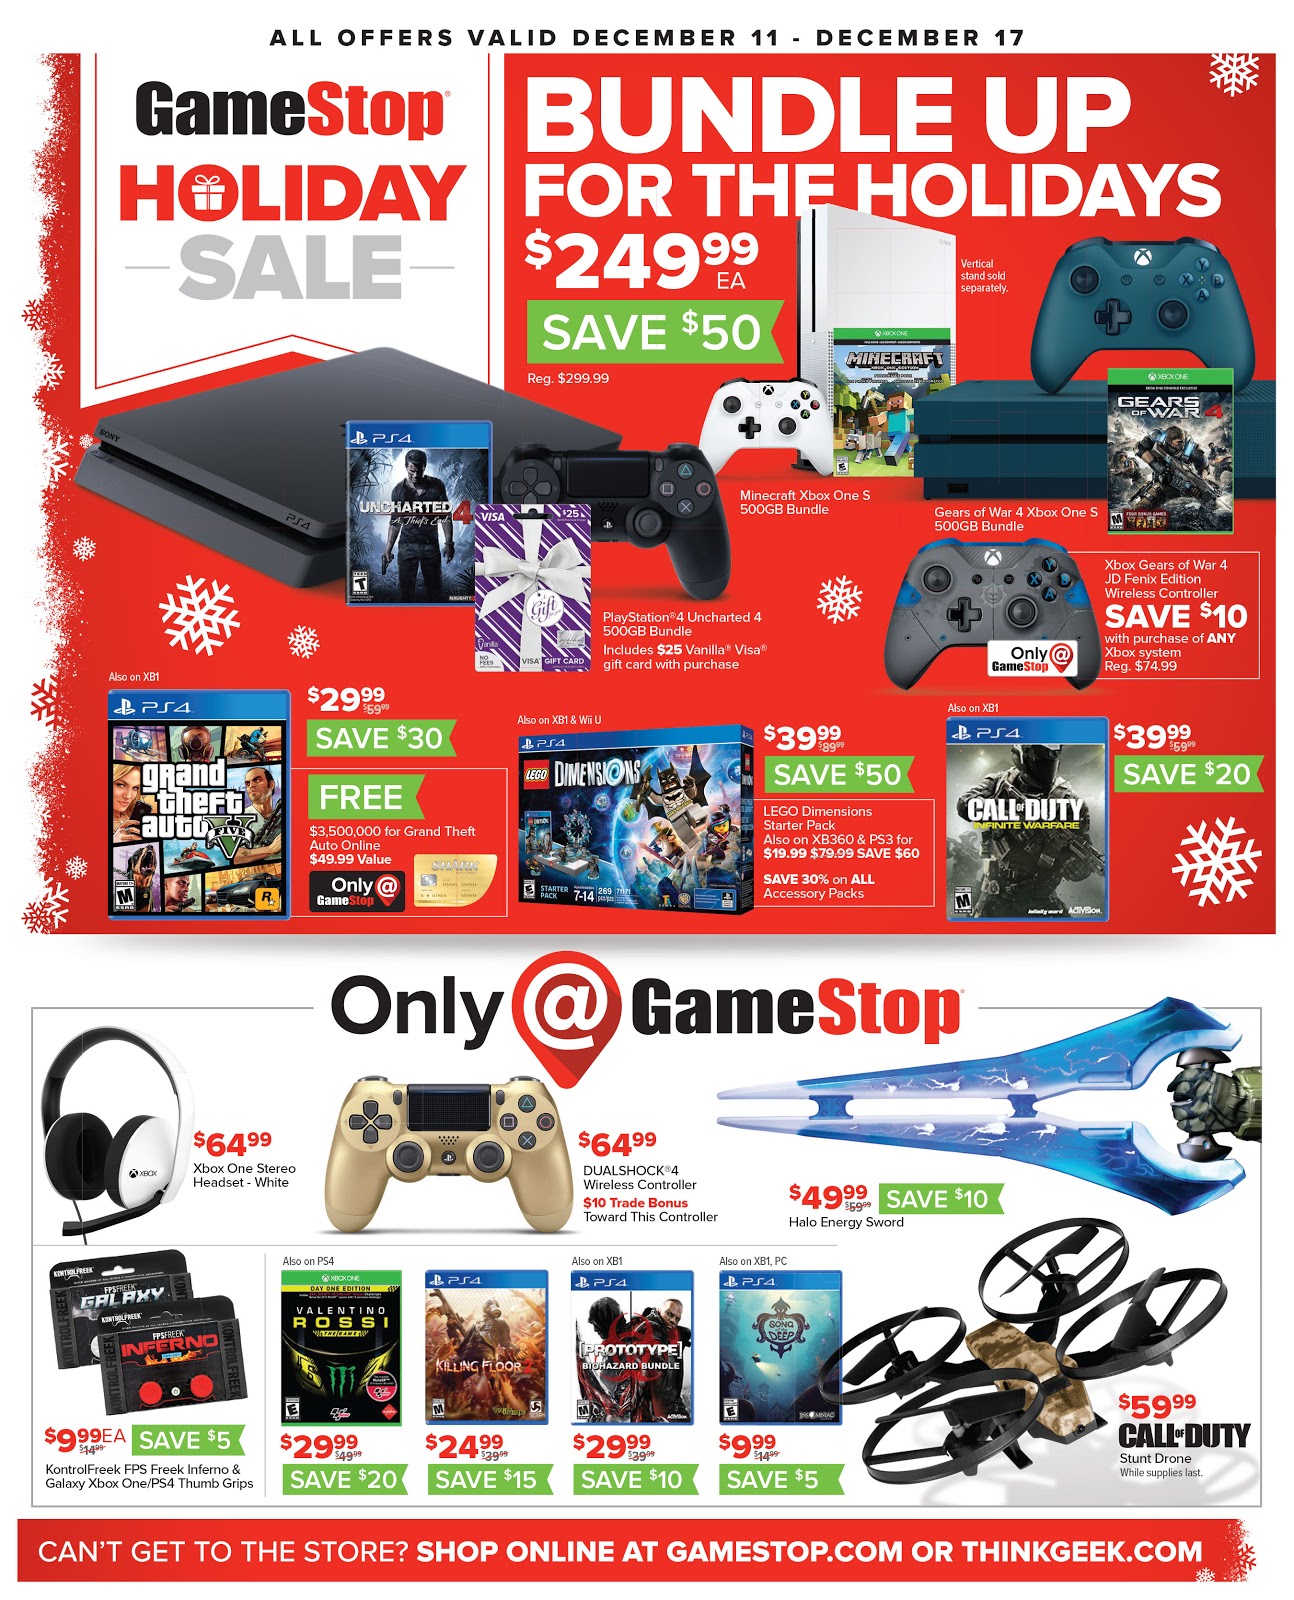 Screenshot showing a GameStop promotional banner